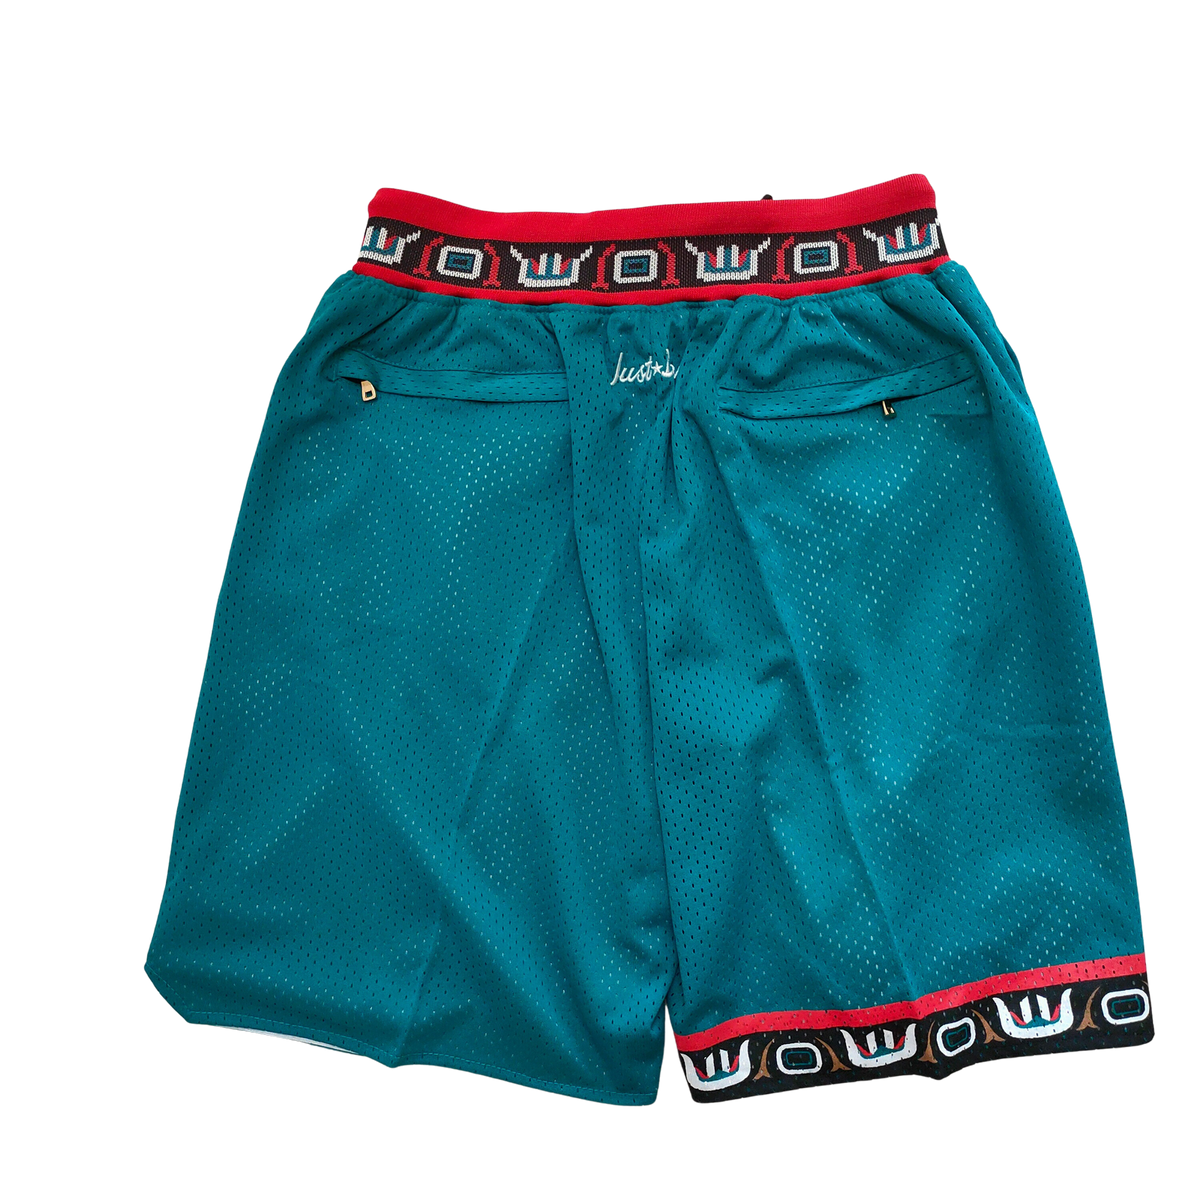 Memphis Grizzlies shorts basketball shorts